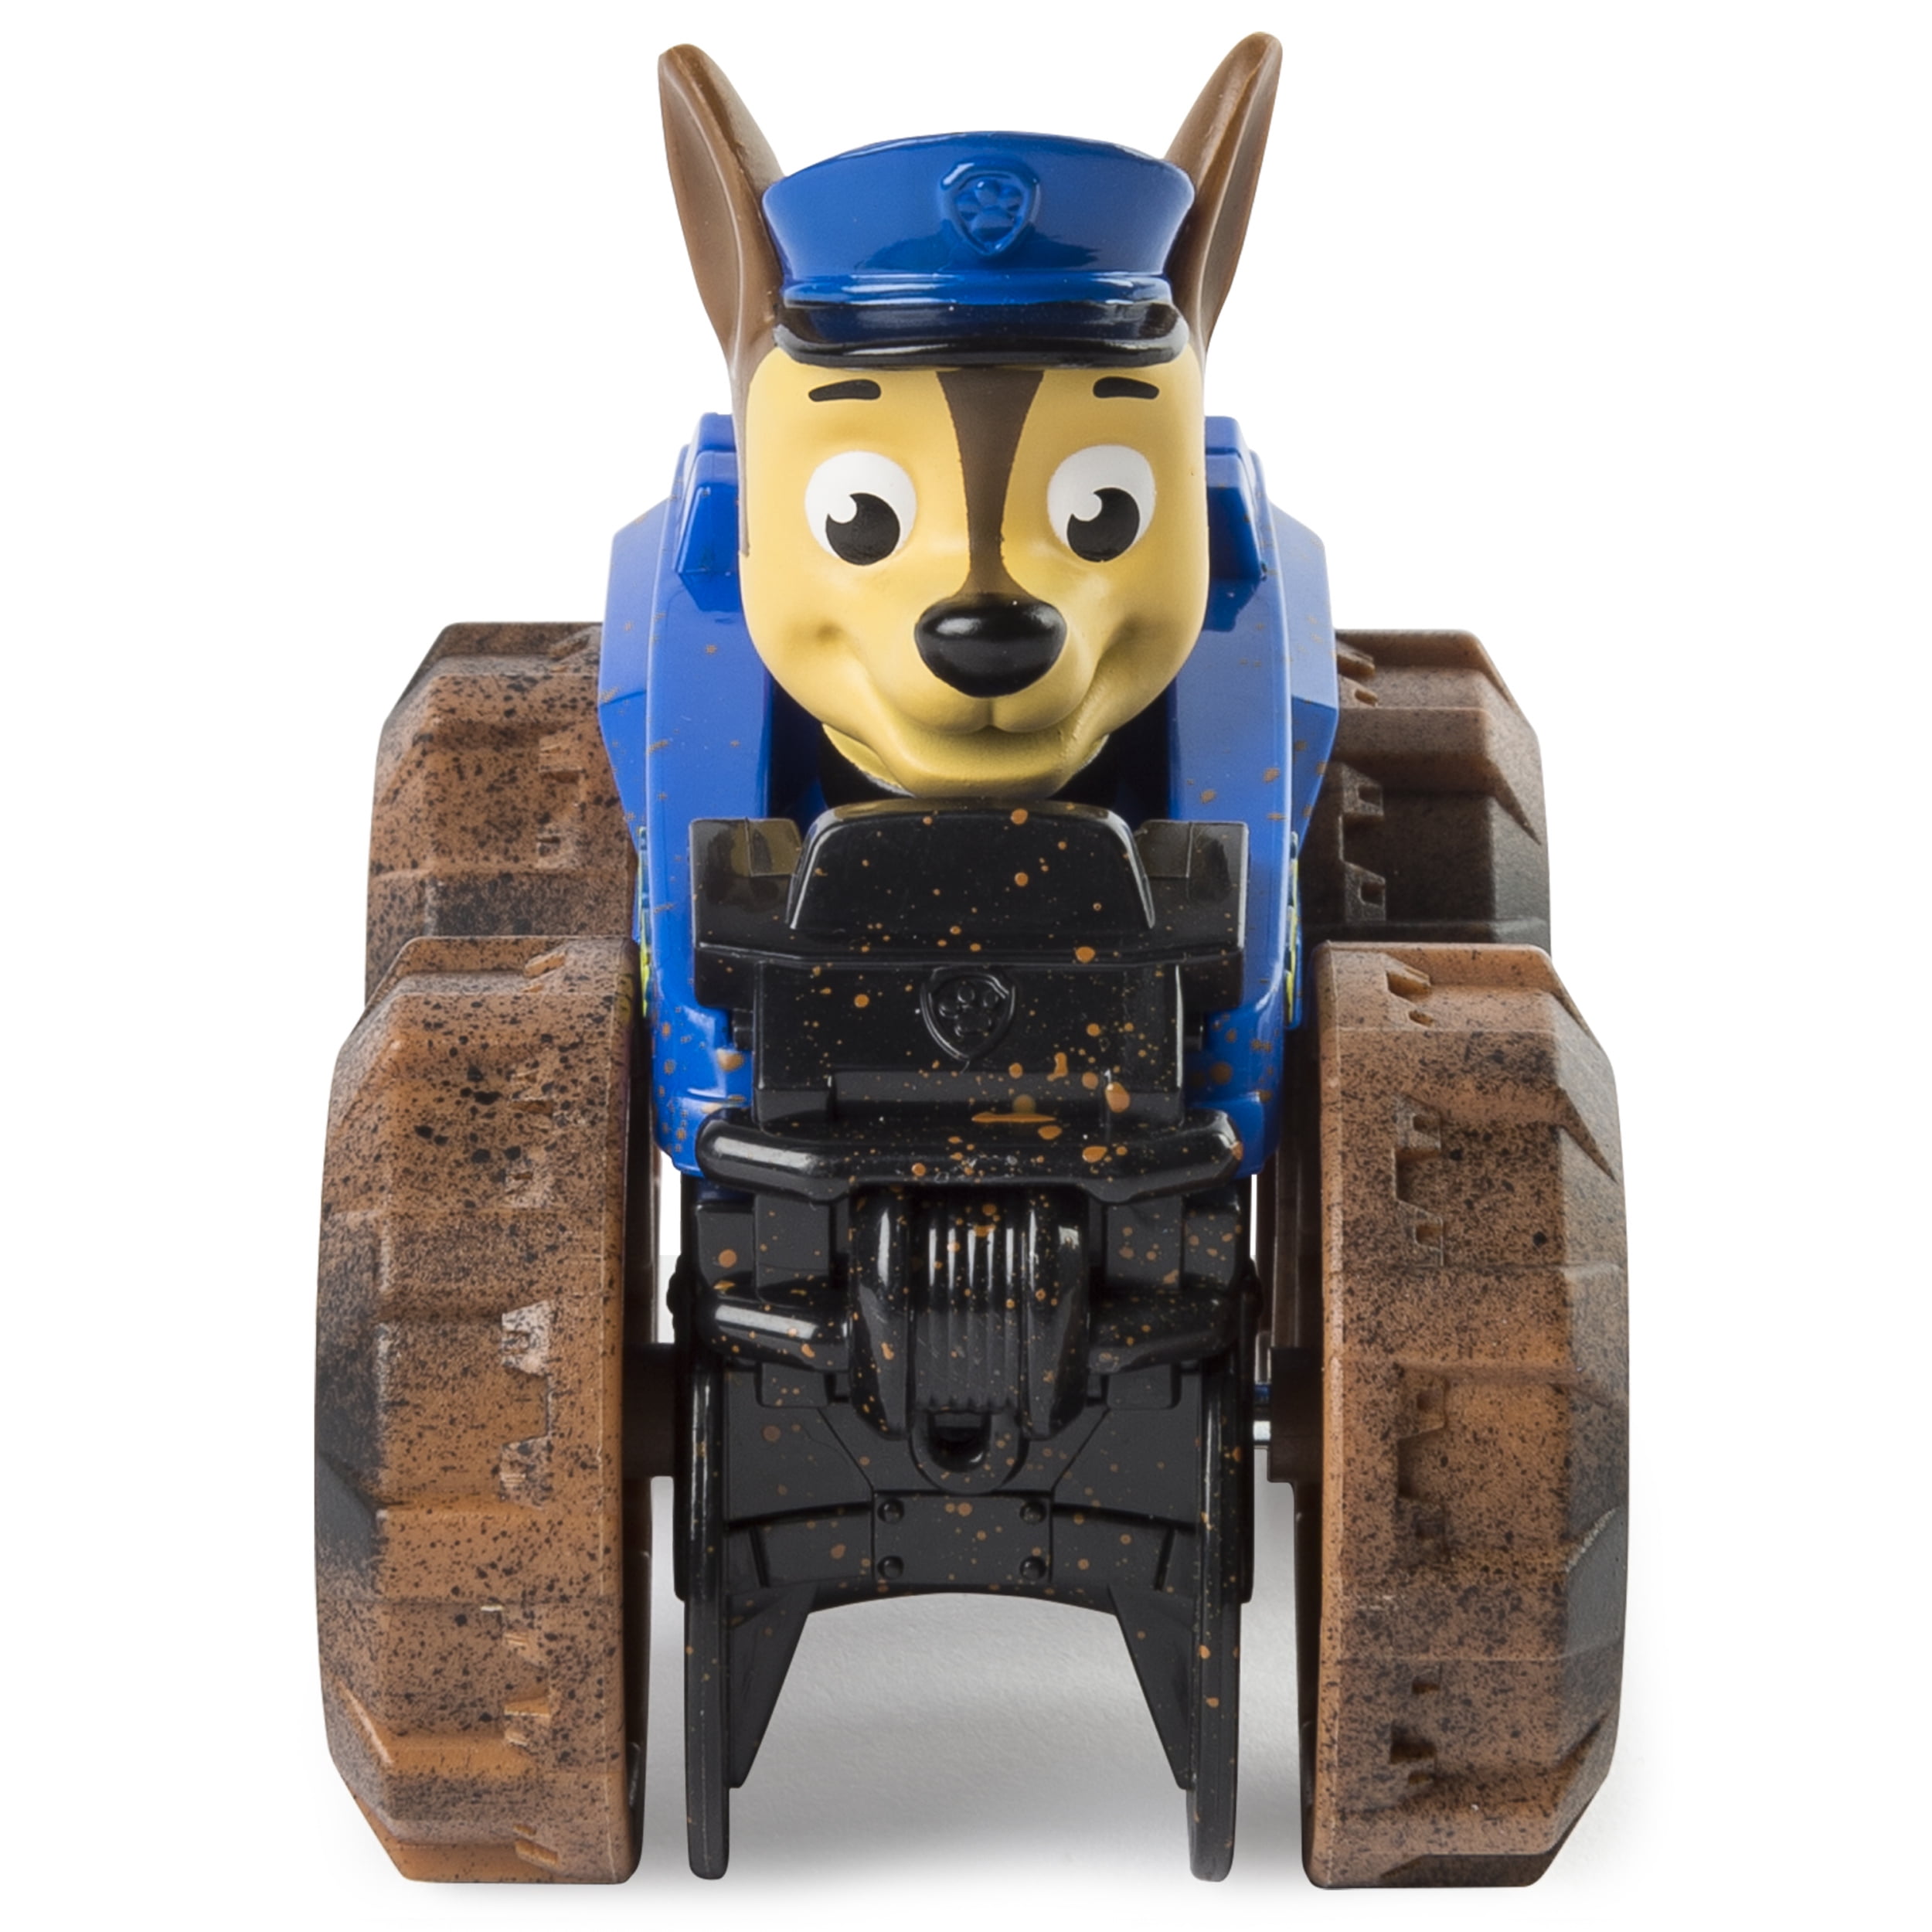 paw patrol monster truck toy